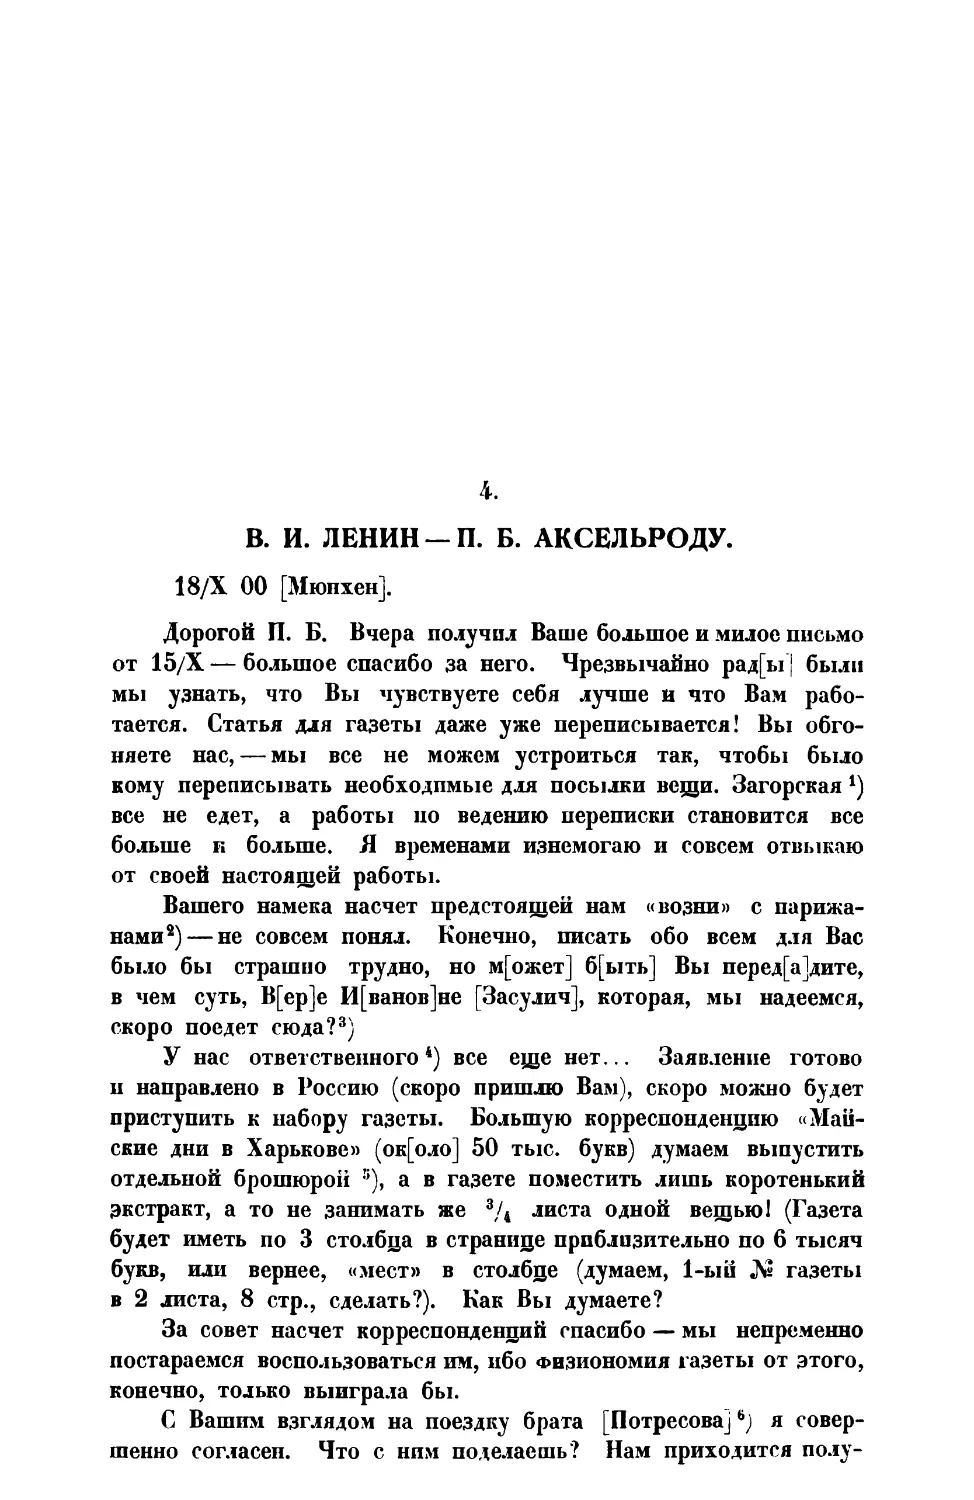 4. В. И. Л е н и н. — Письмо П. Б. Аксельроду от 18 X 1900 г.